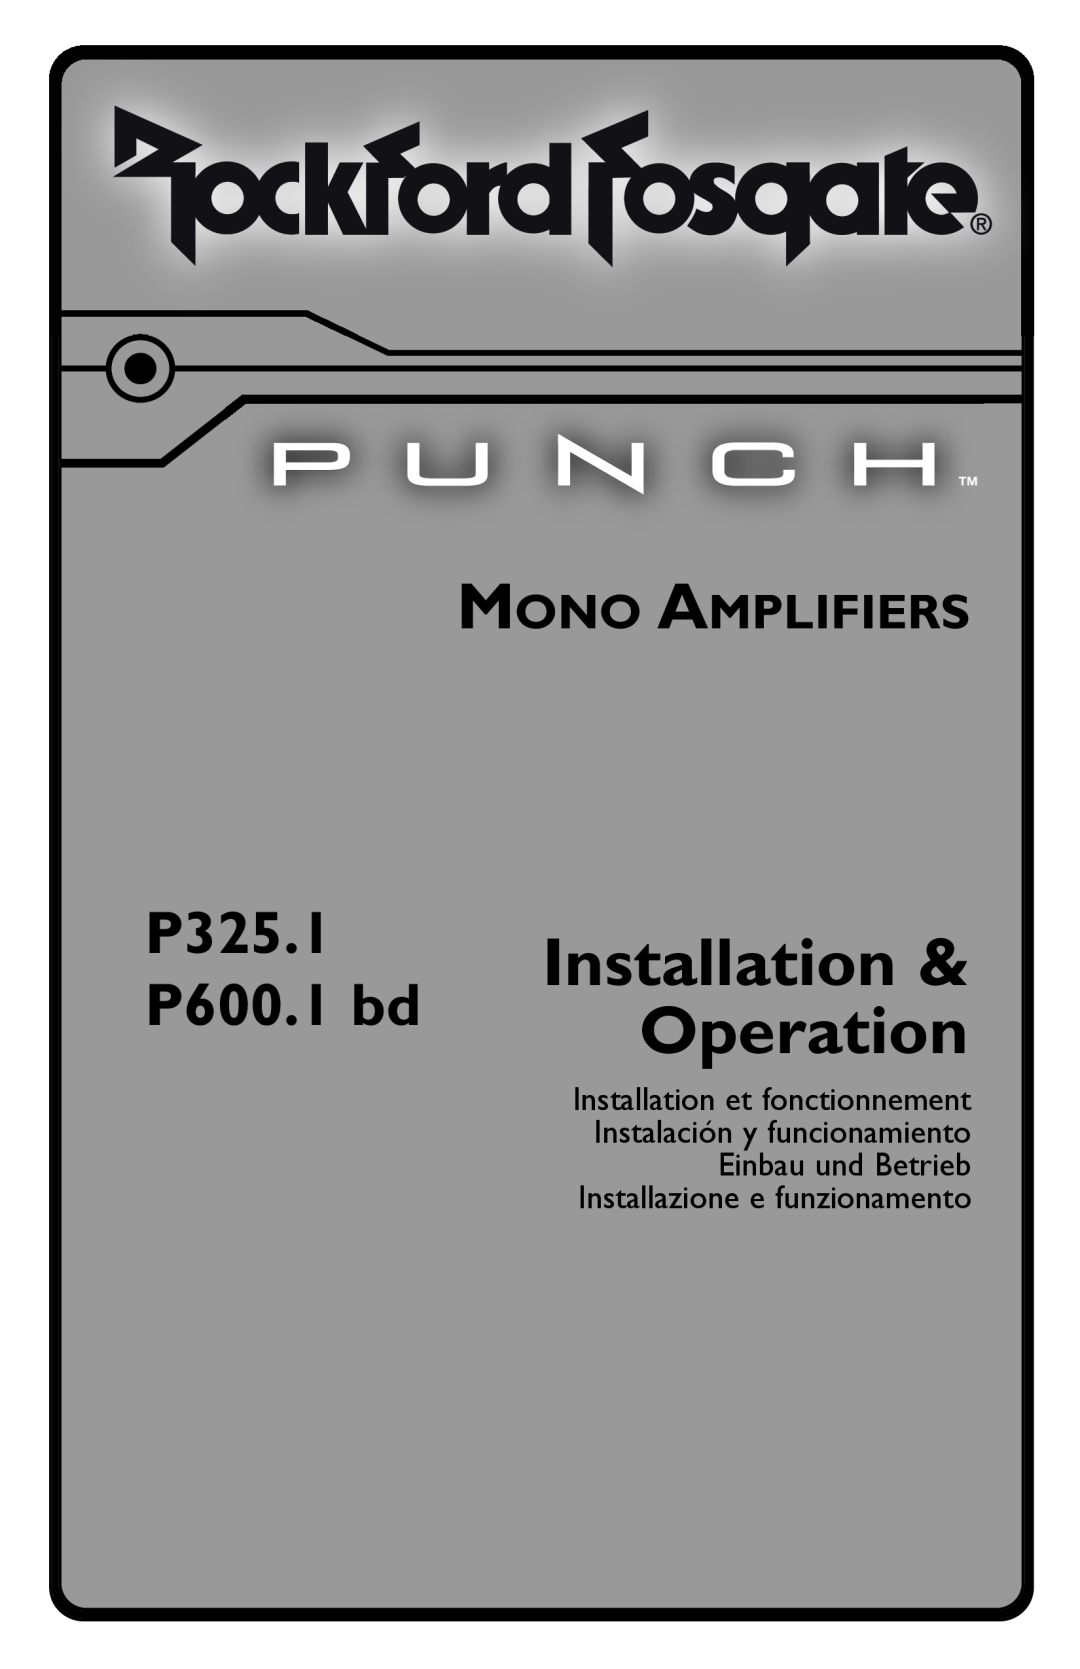 Rockford Fosgate P325.I, P600..I bd manual Installation & Operation, P325.1 P600.1 bd, Mono Amplifiers 